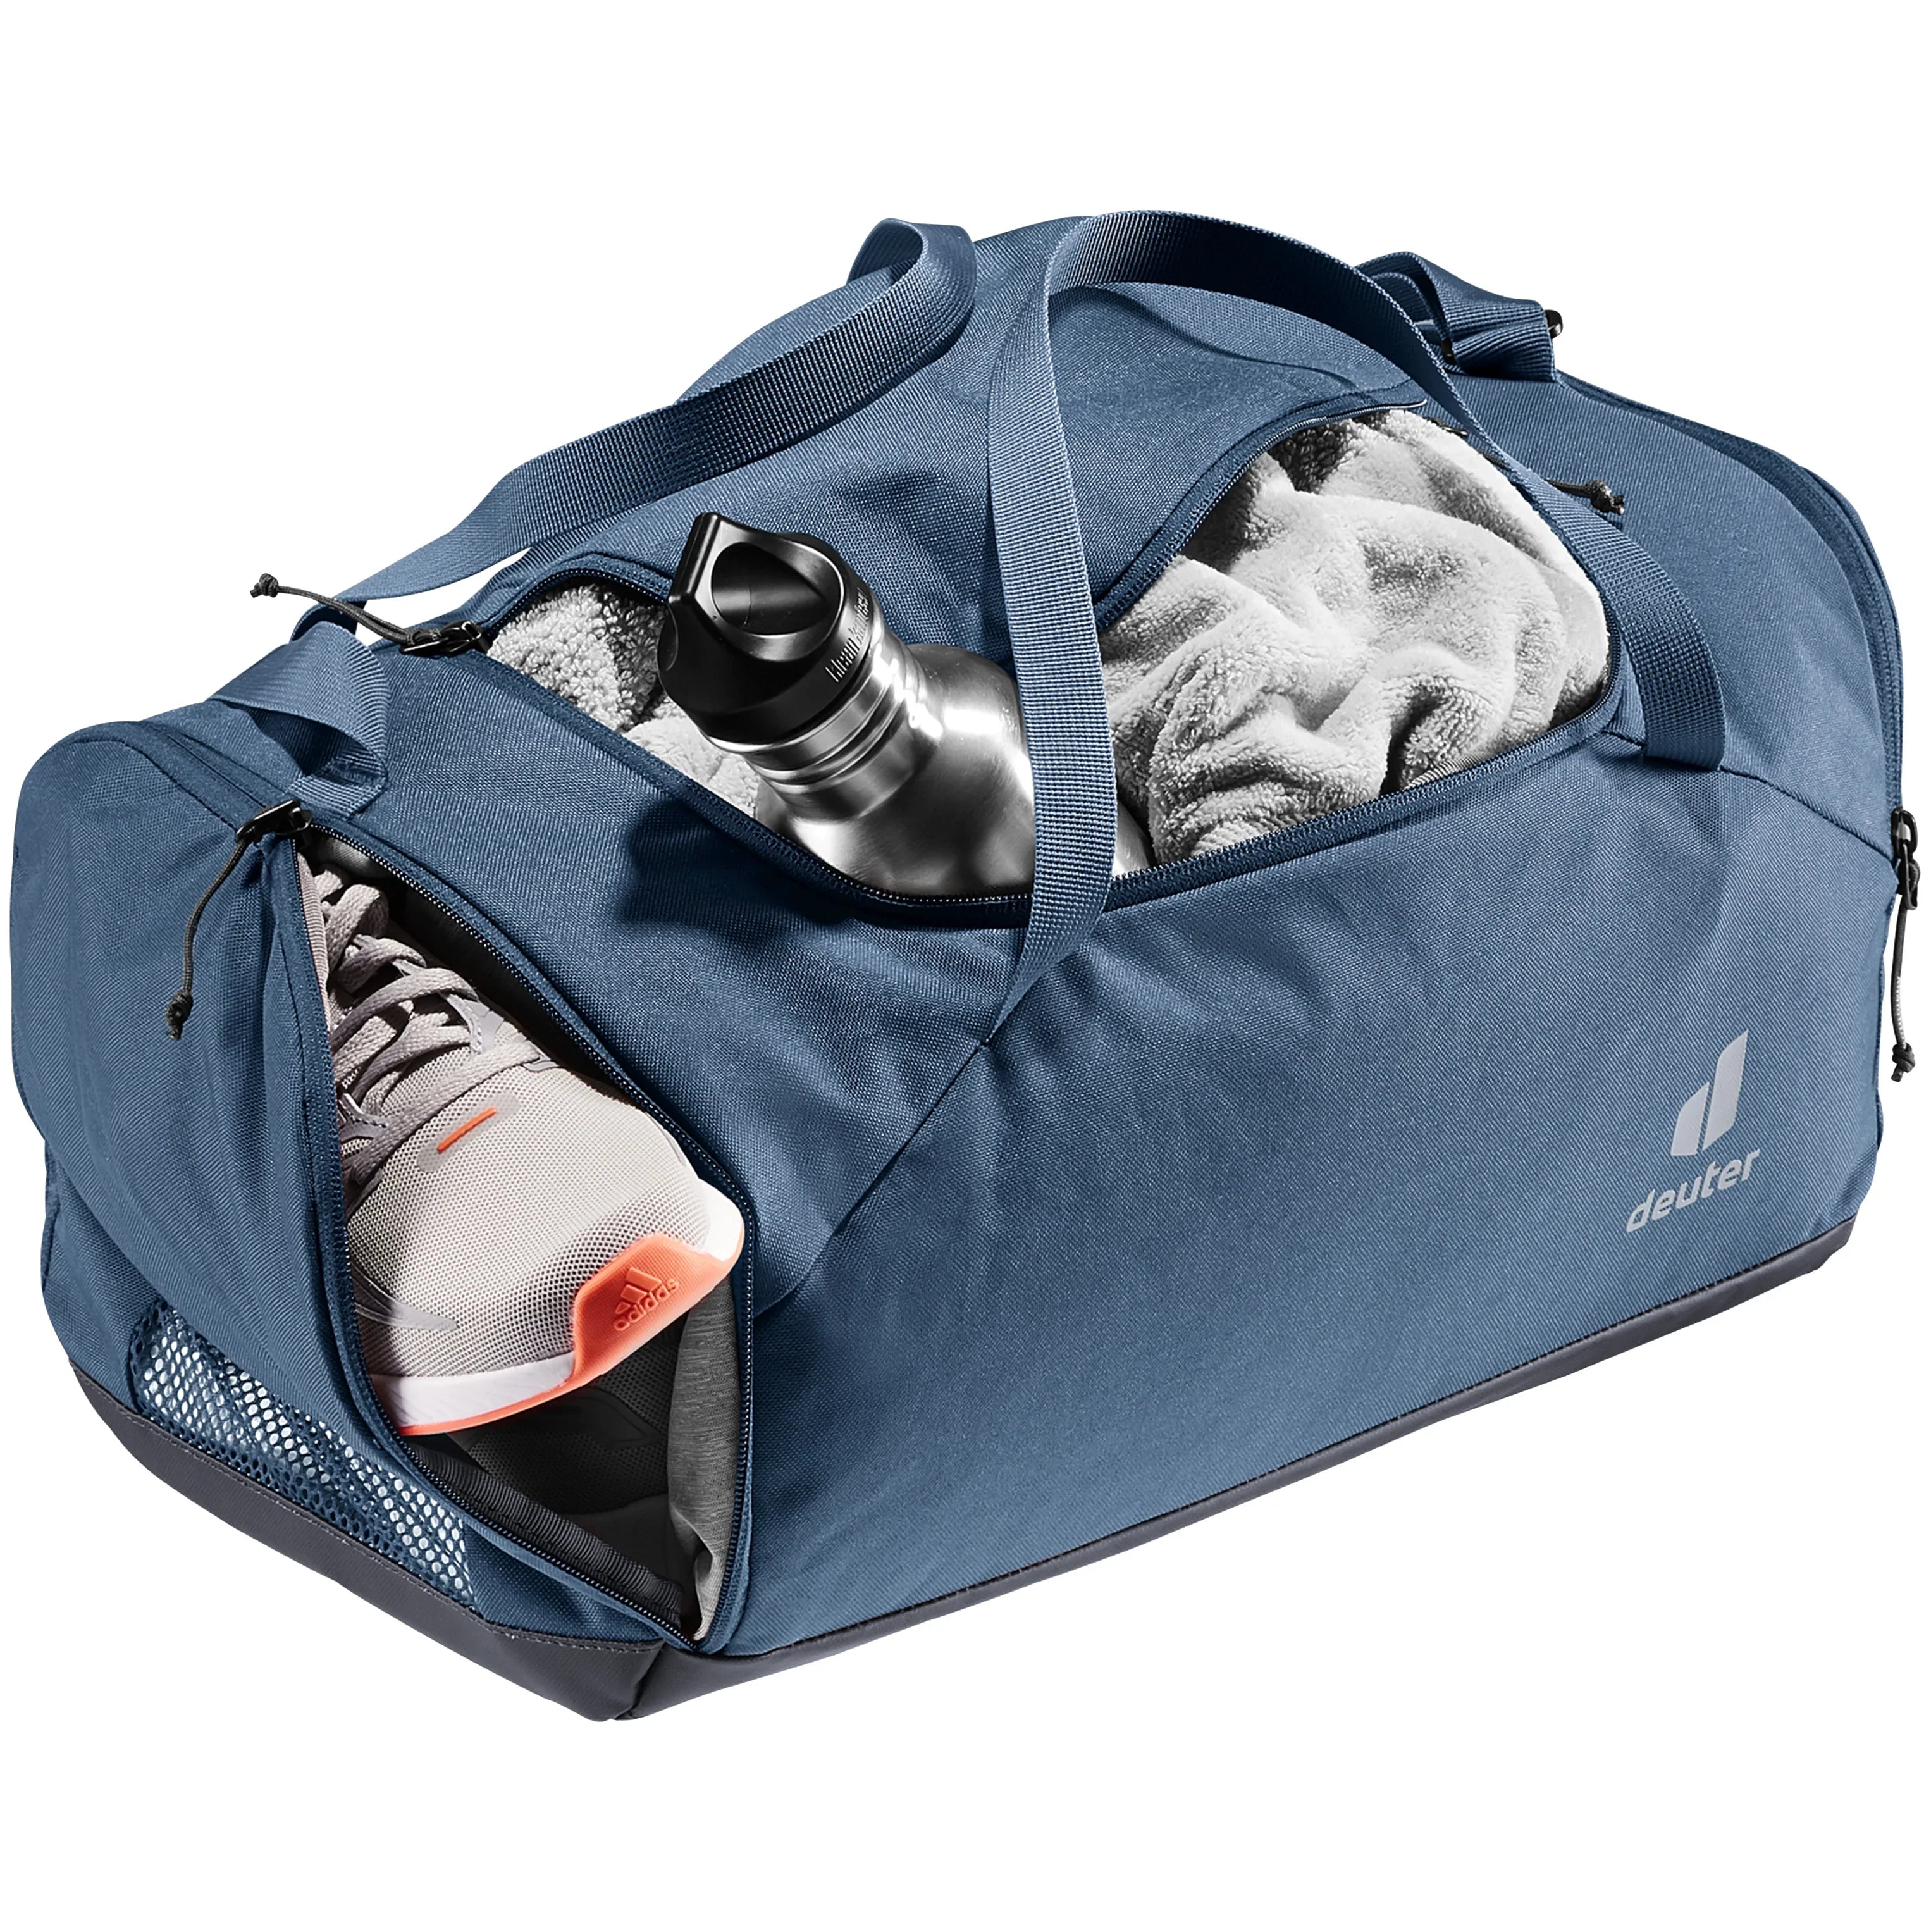 Deuter Daypack Hopper sports bag 48 cm - Deepsea-Graphite